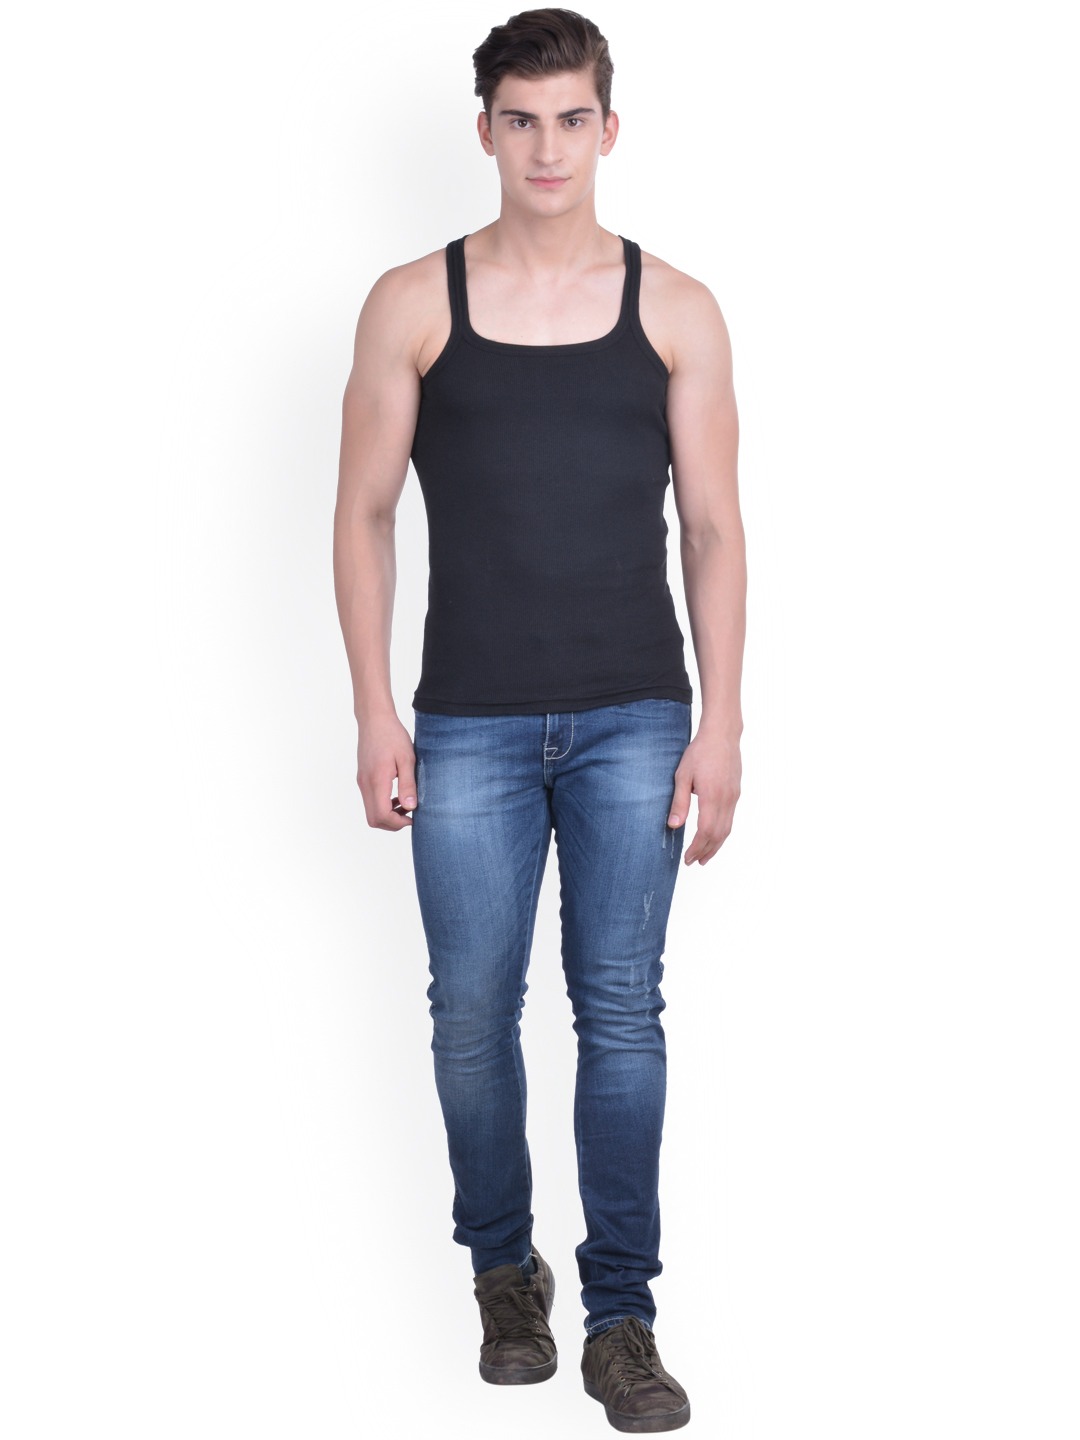 Clothing Innerwear Vests | Dollar Bigboss Pack of 2 Black Innerwear Vests MDBB-01 - YX59687